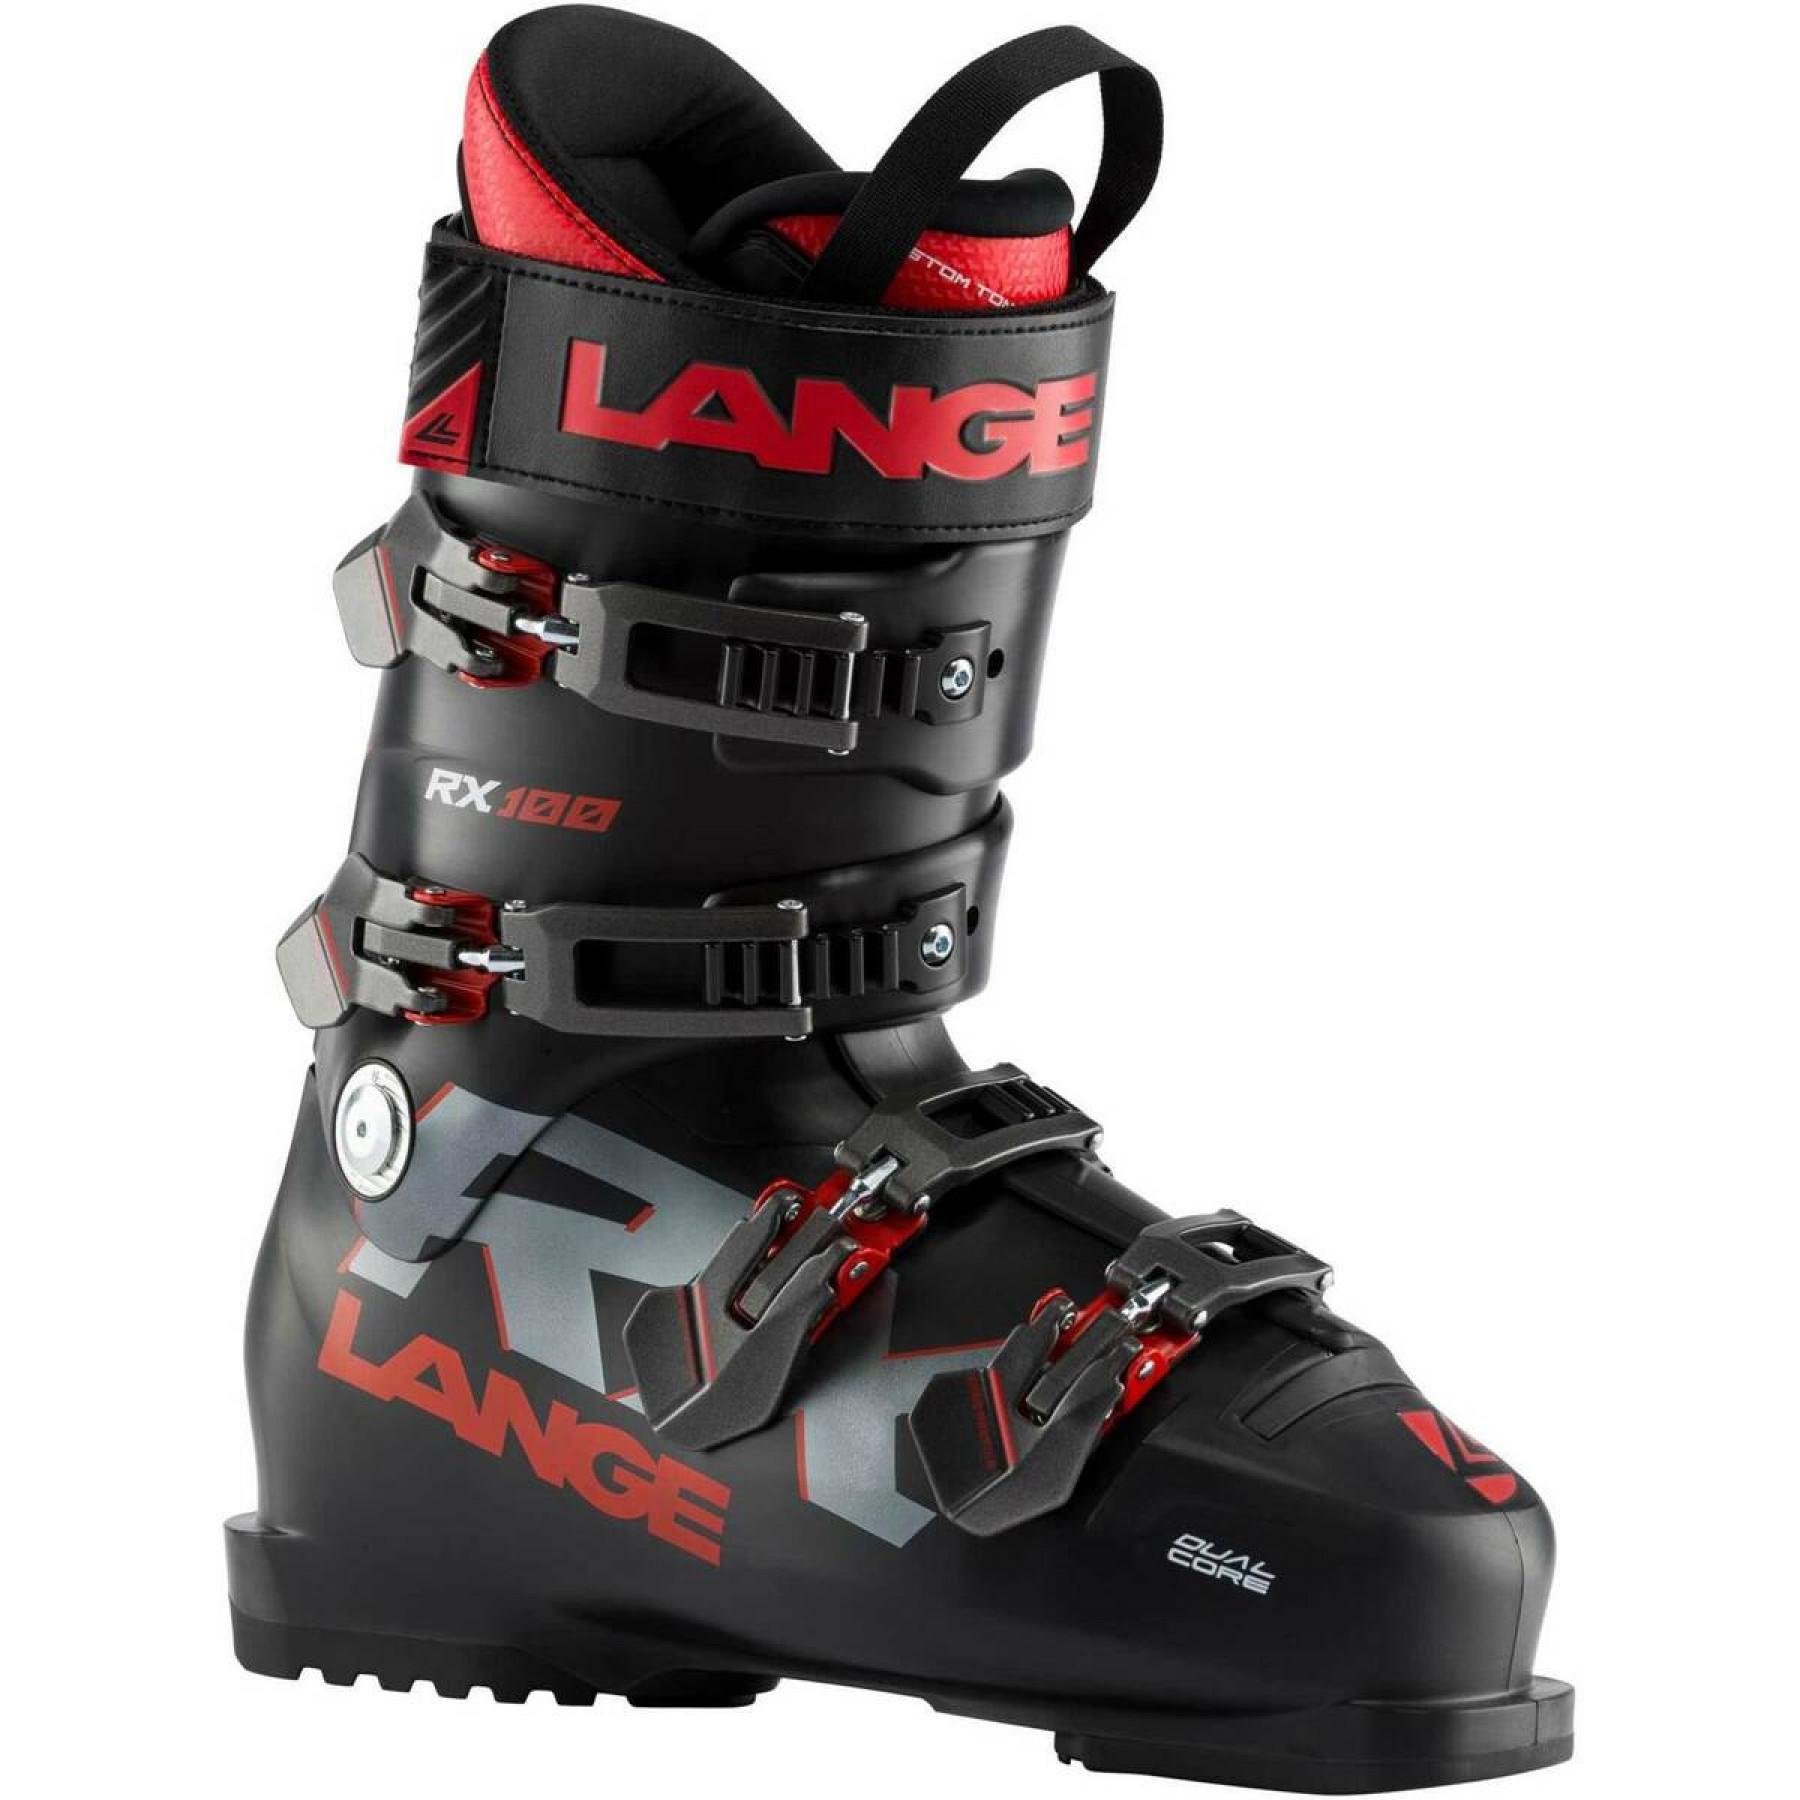 Buty narciarskie Lange rx 100